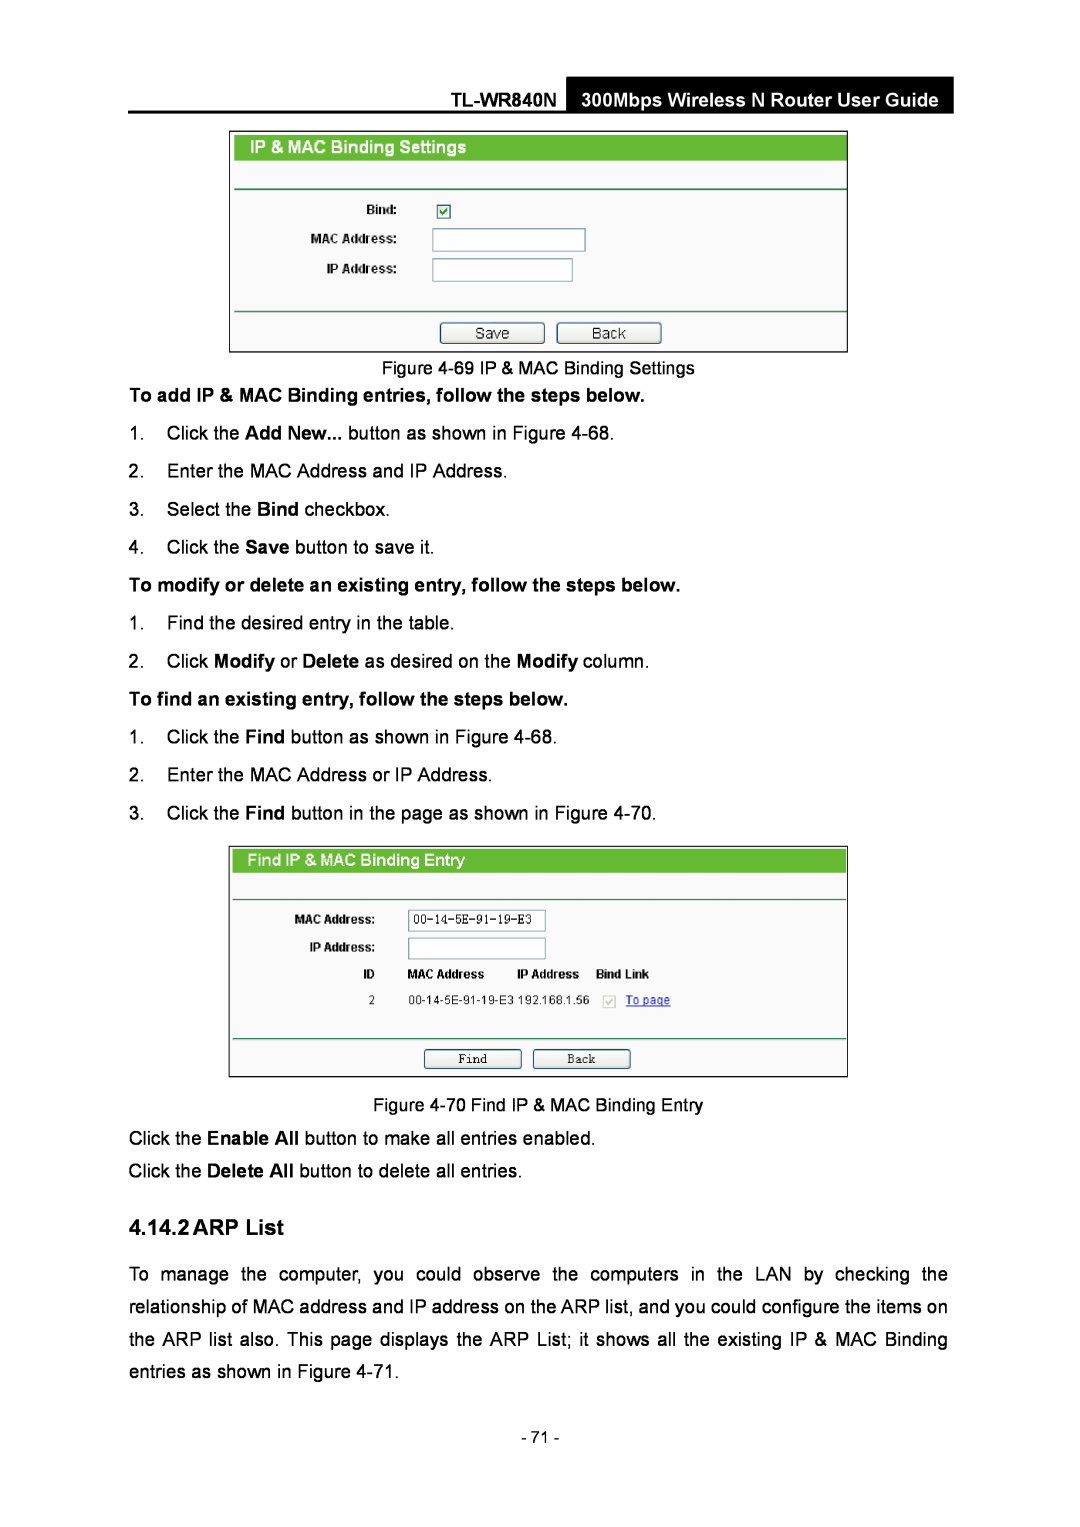 TP-Link TL-WR840N manual ARP List, To add IP & MAC Binding entries, follow the steps below 